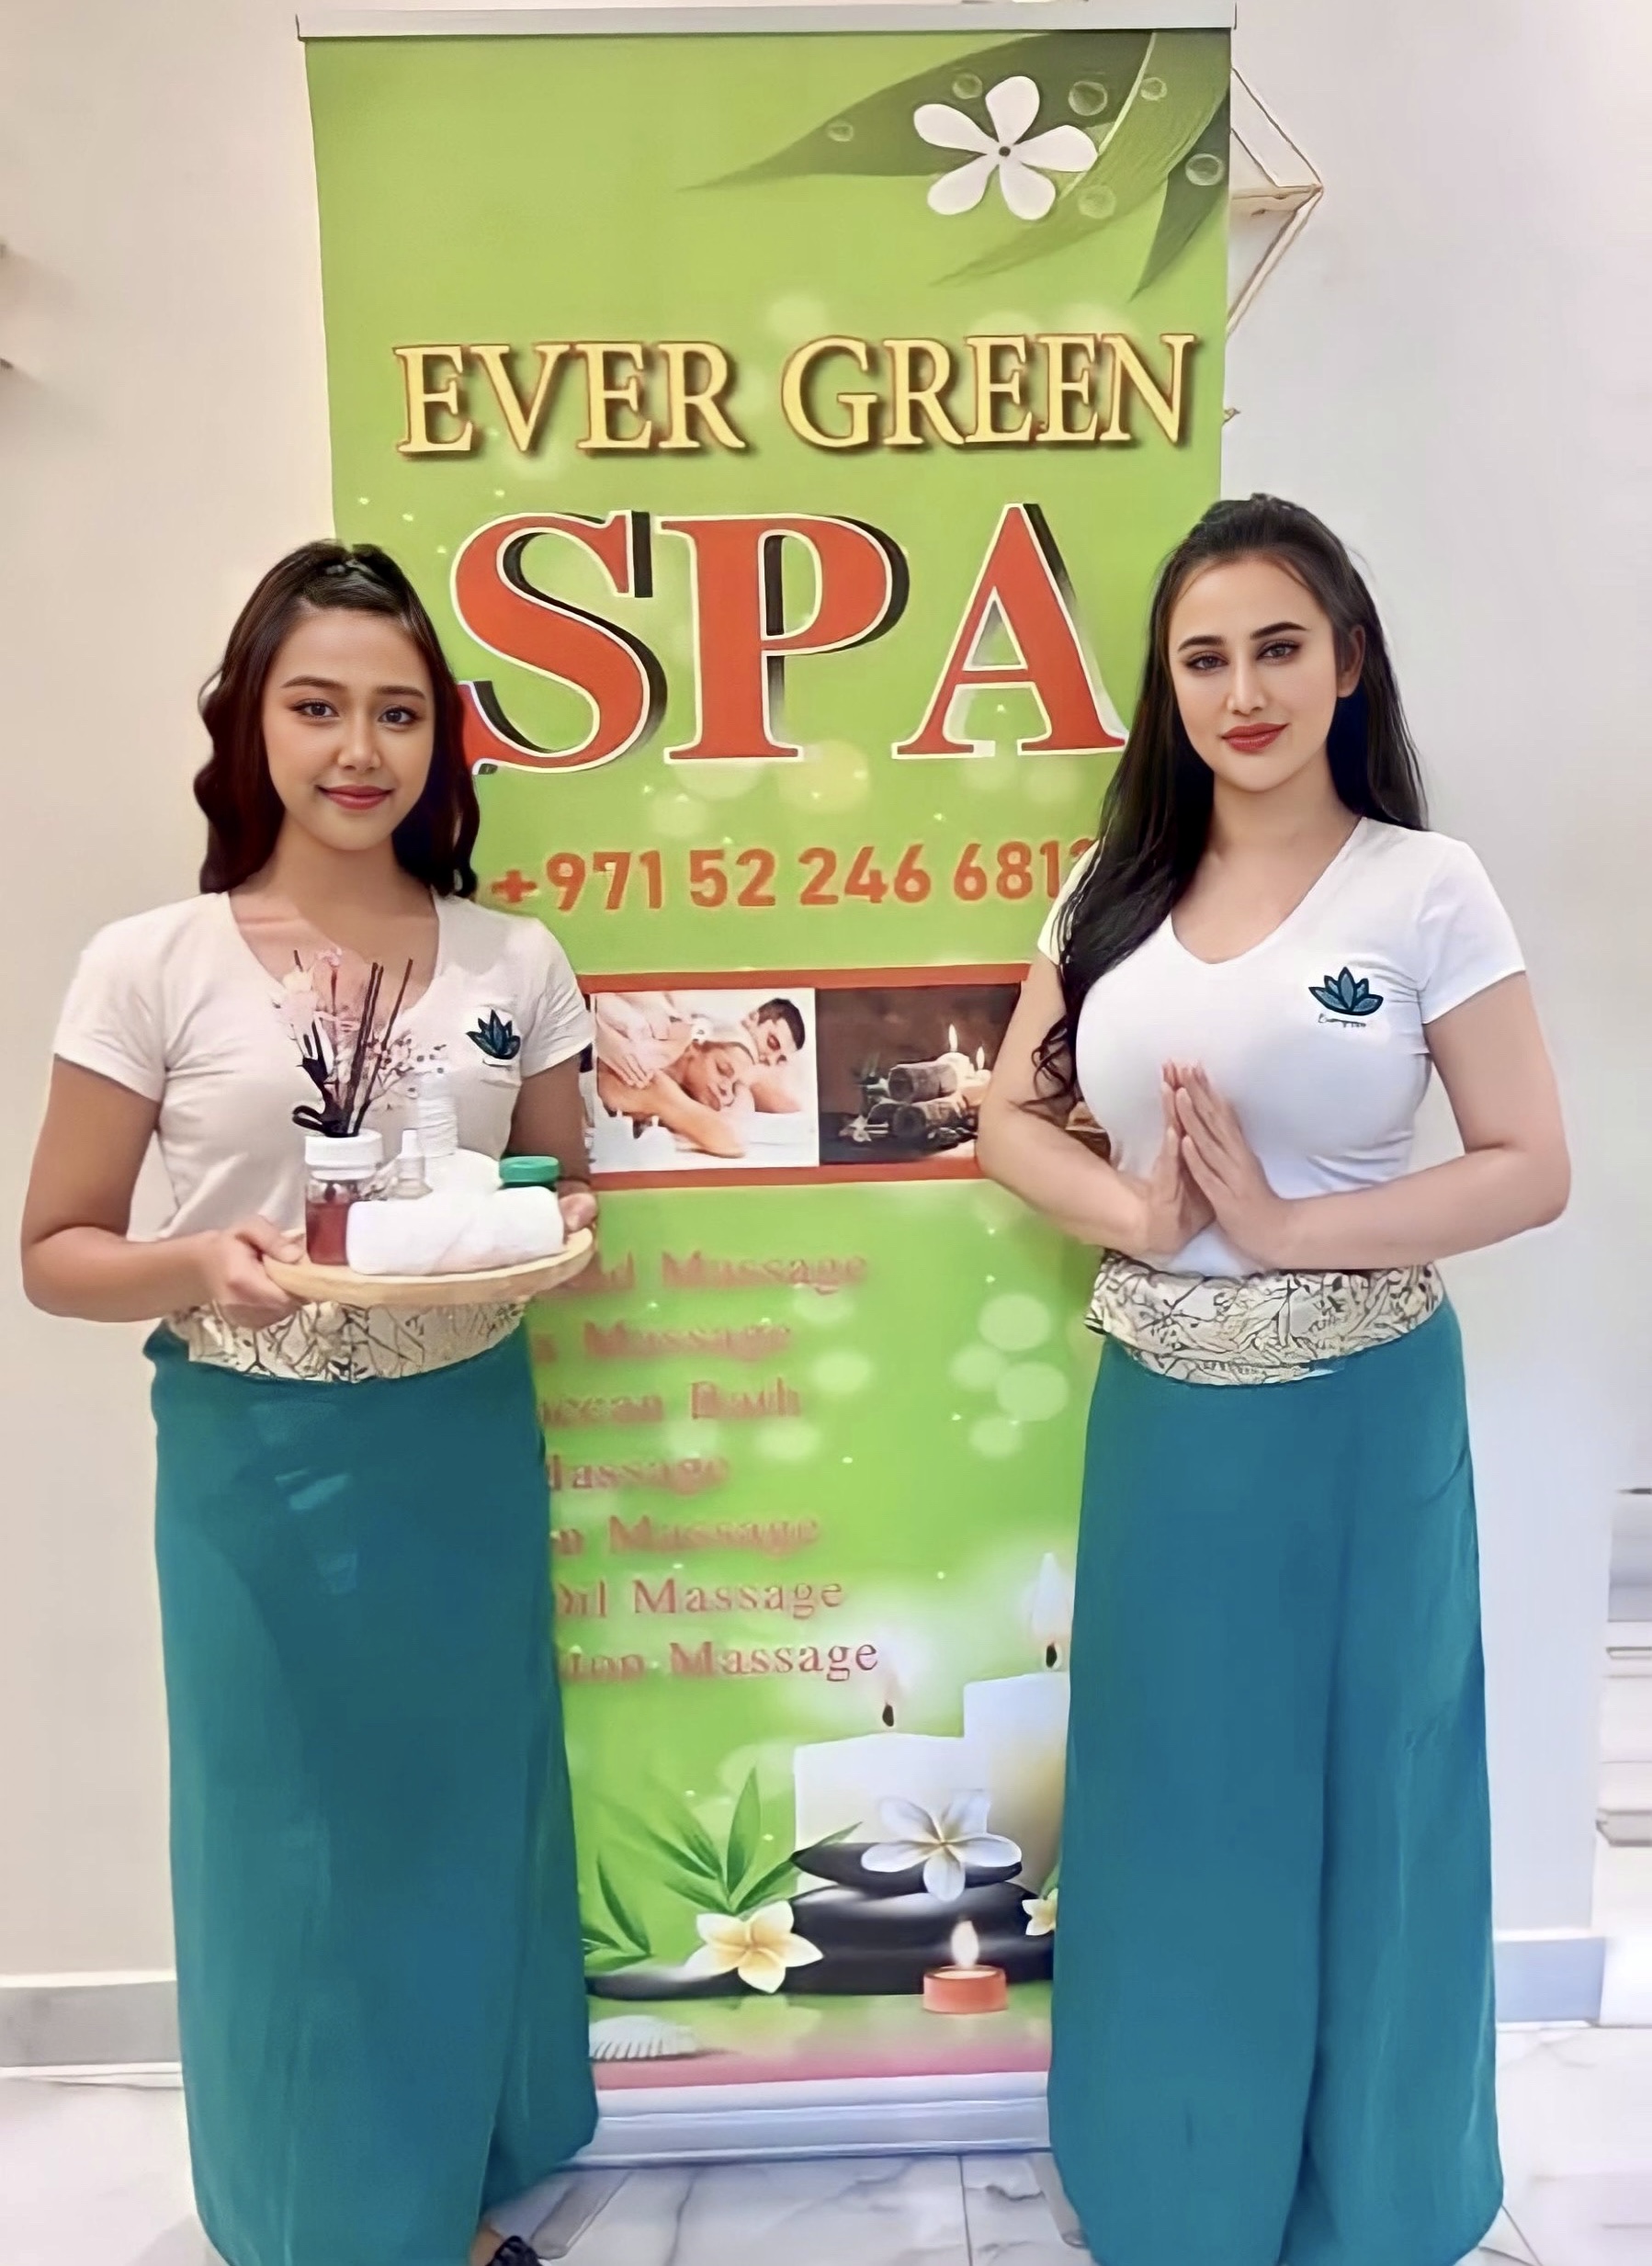 ashish rijal share massage parlours in dubai photos